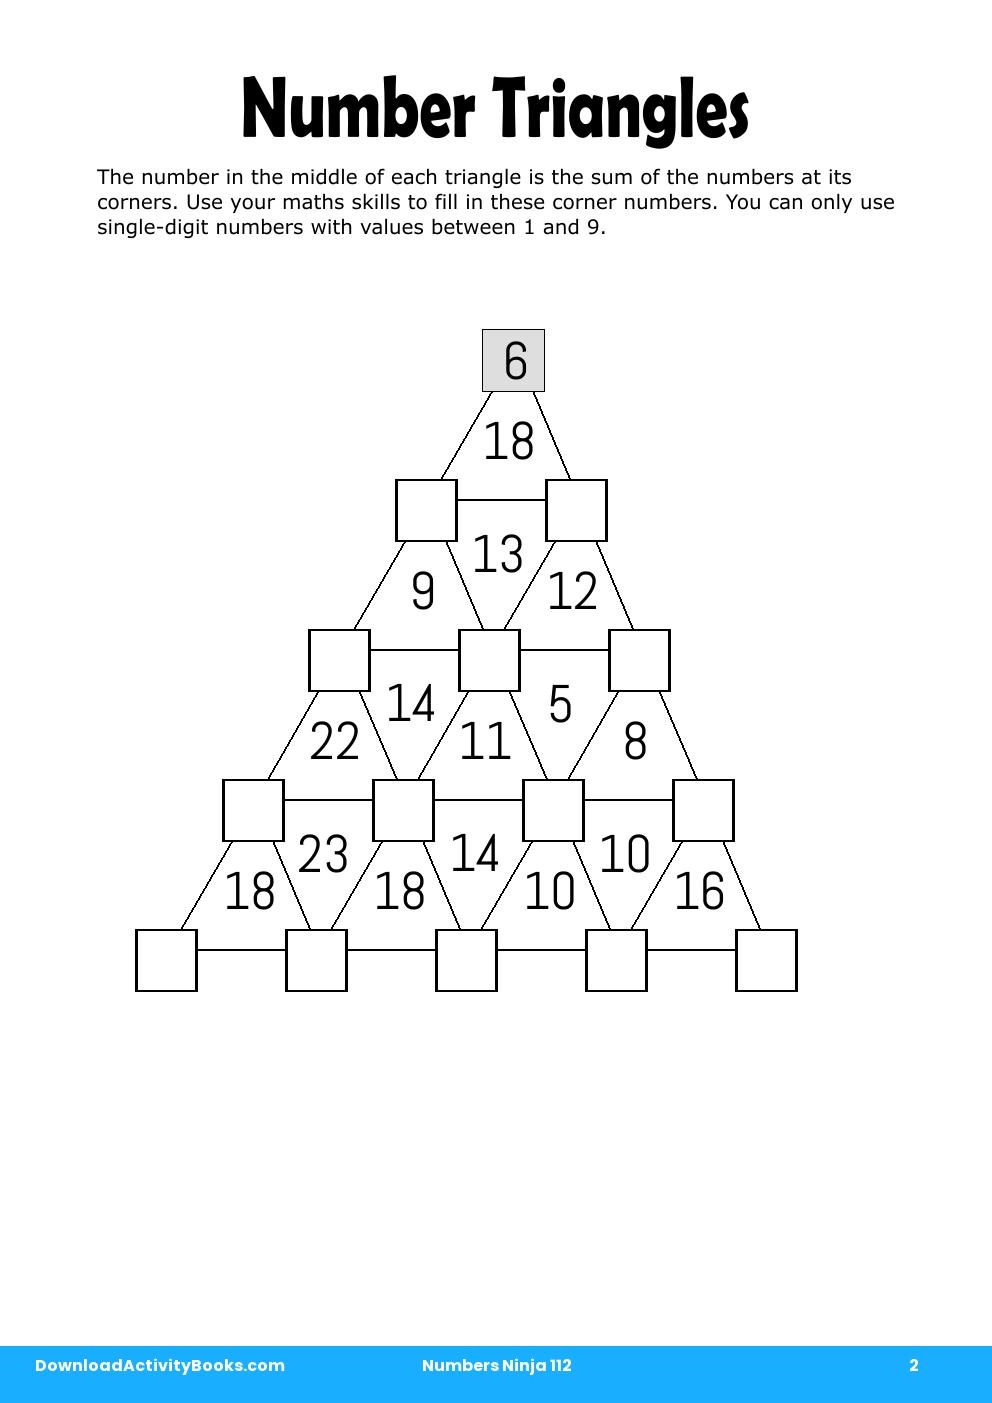 Number Triangles in Numbers Ninja 112